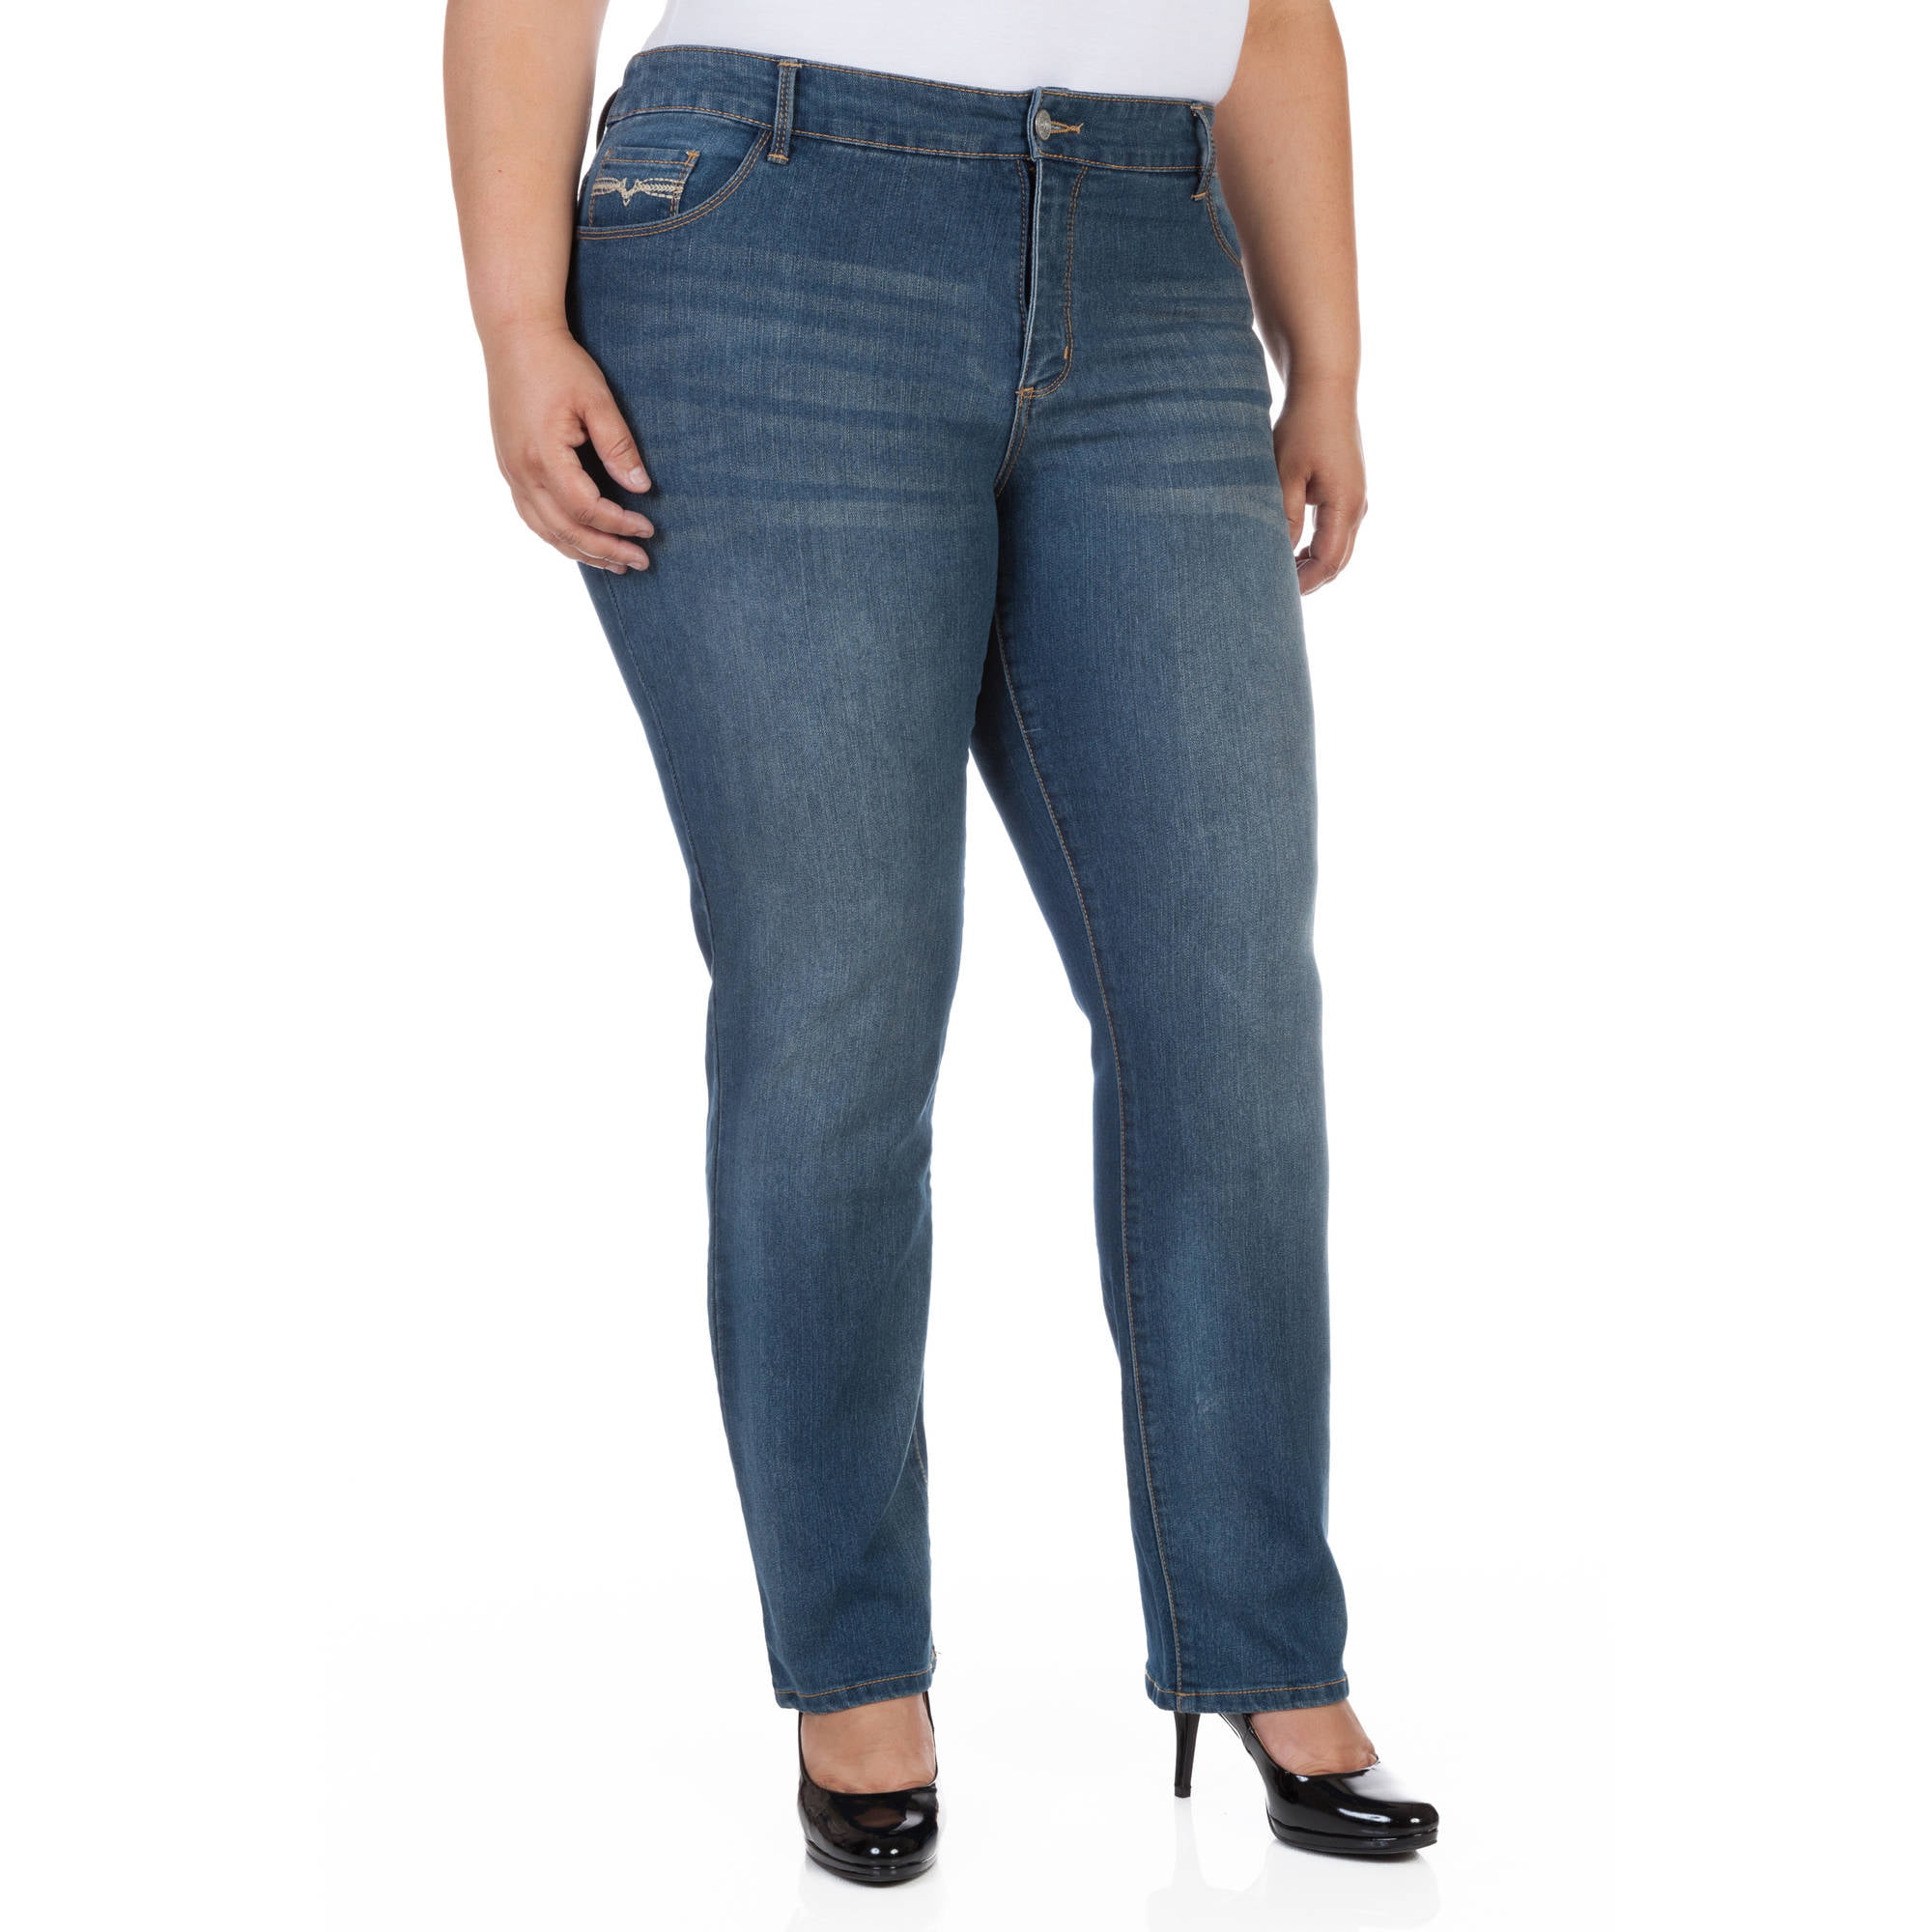 faded glory jeans women's plus size